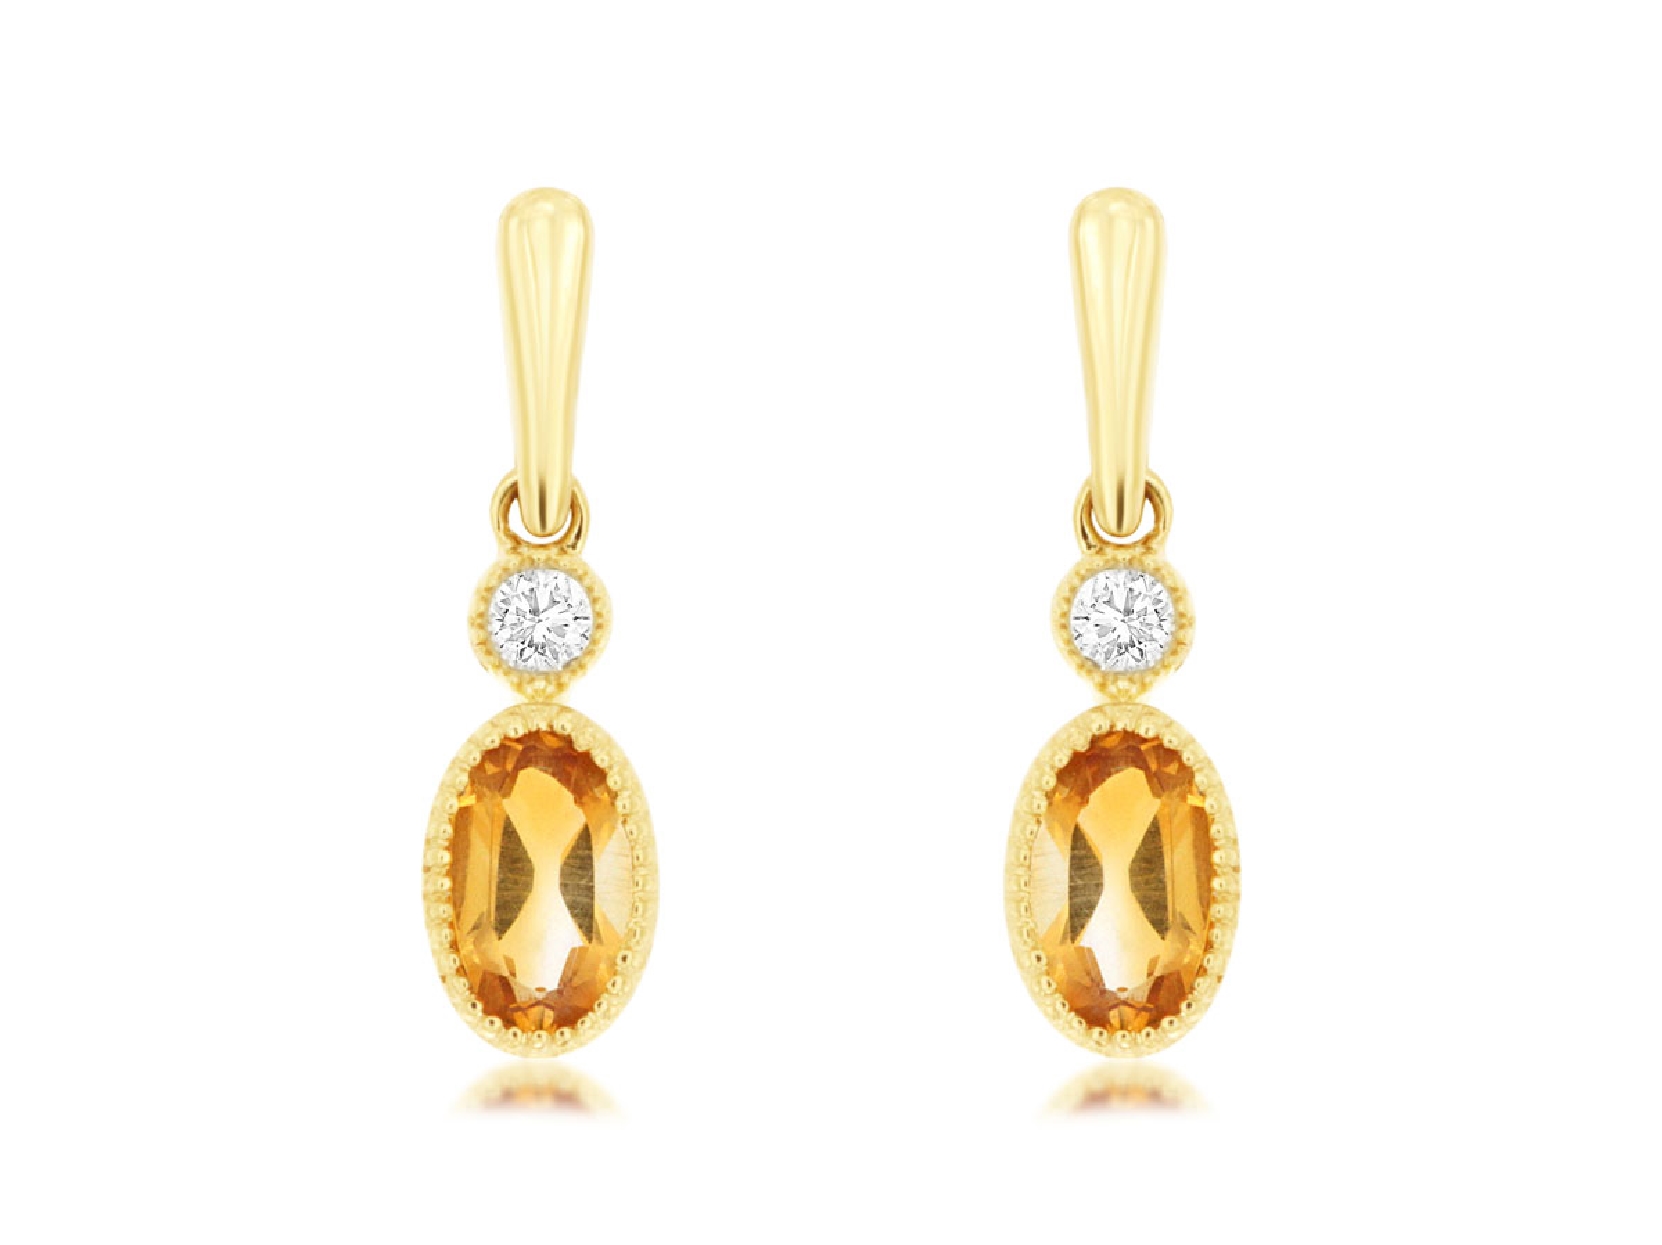 14K Yellow Gold Citrine Drop Earrings with Diamond Accent
0.25CTTW Citrine
0.05CTTW Diamonds